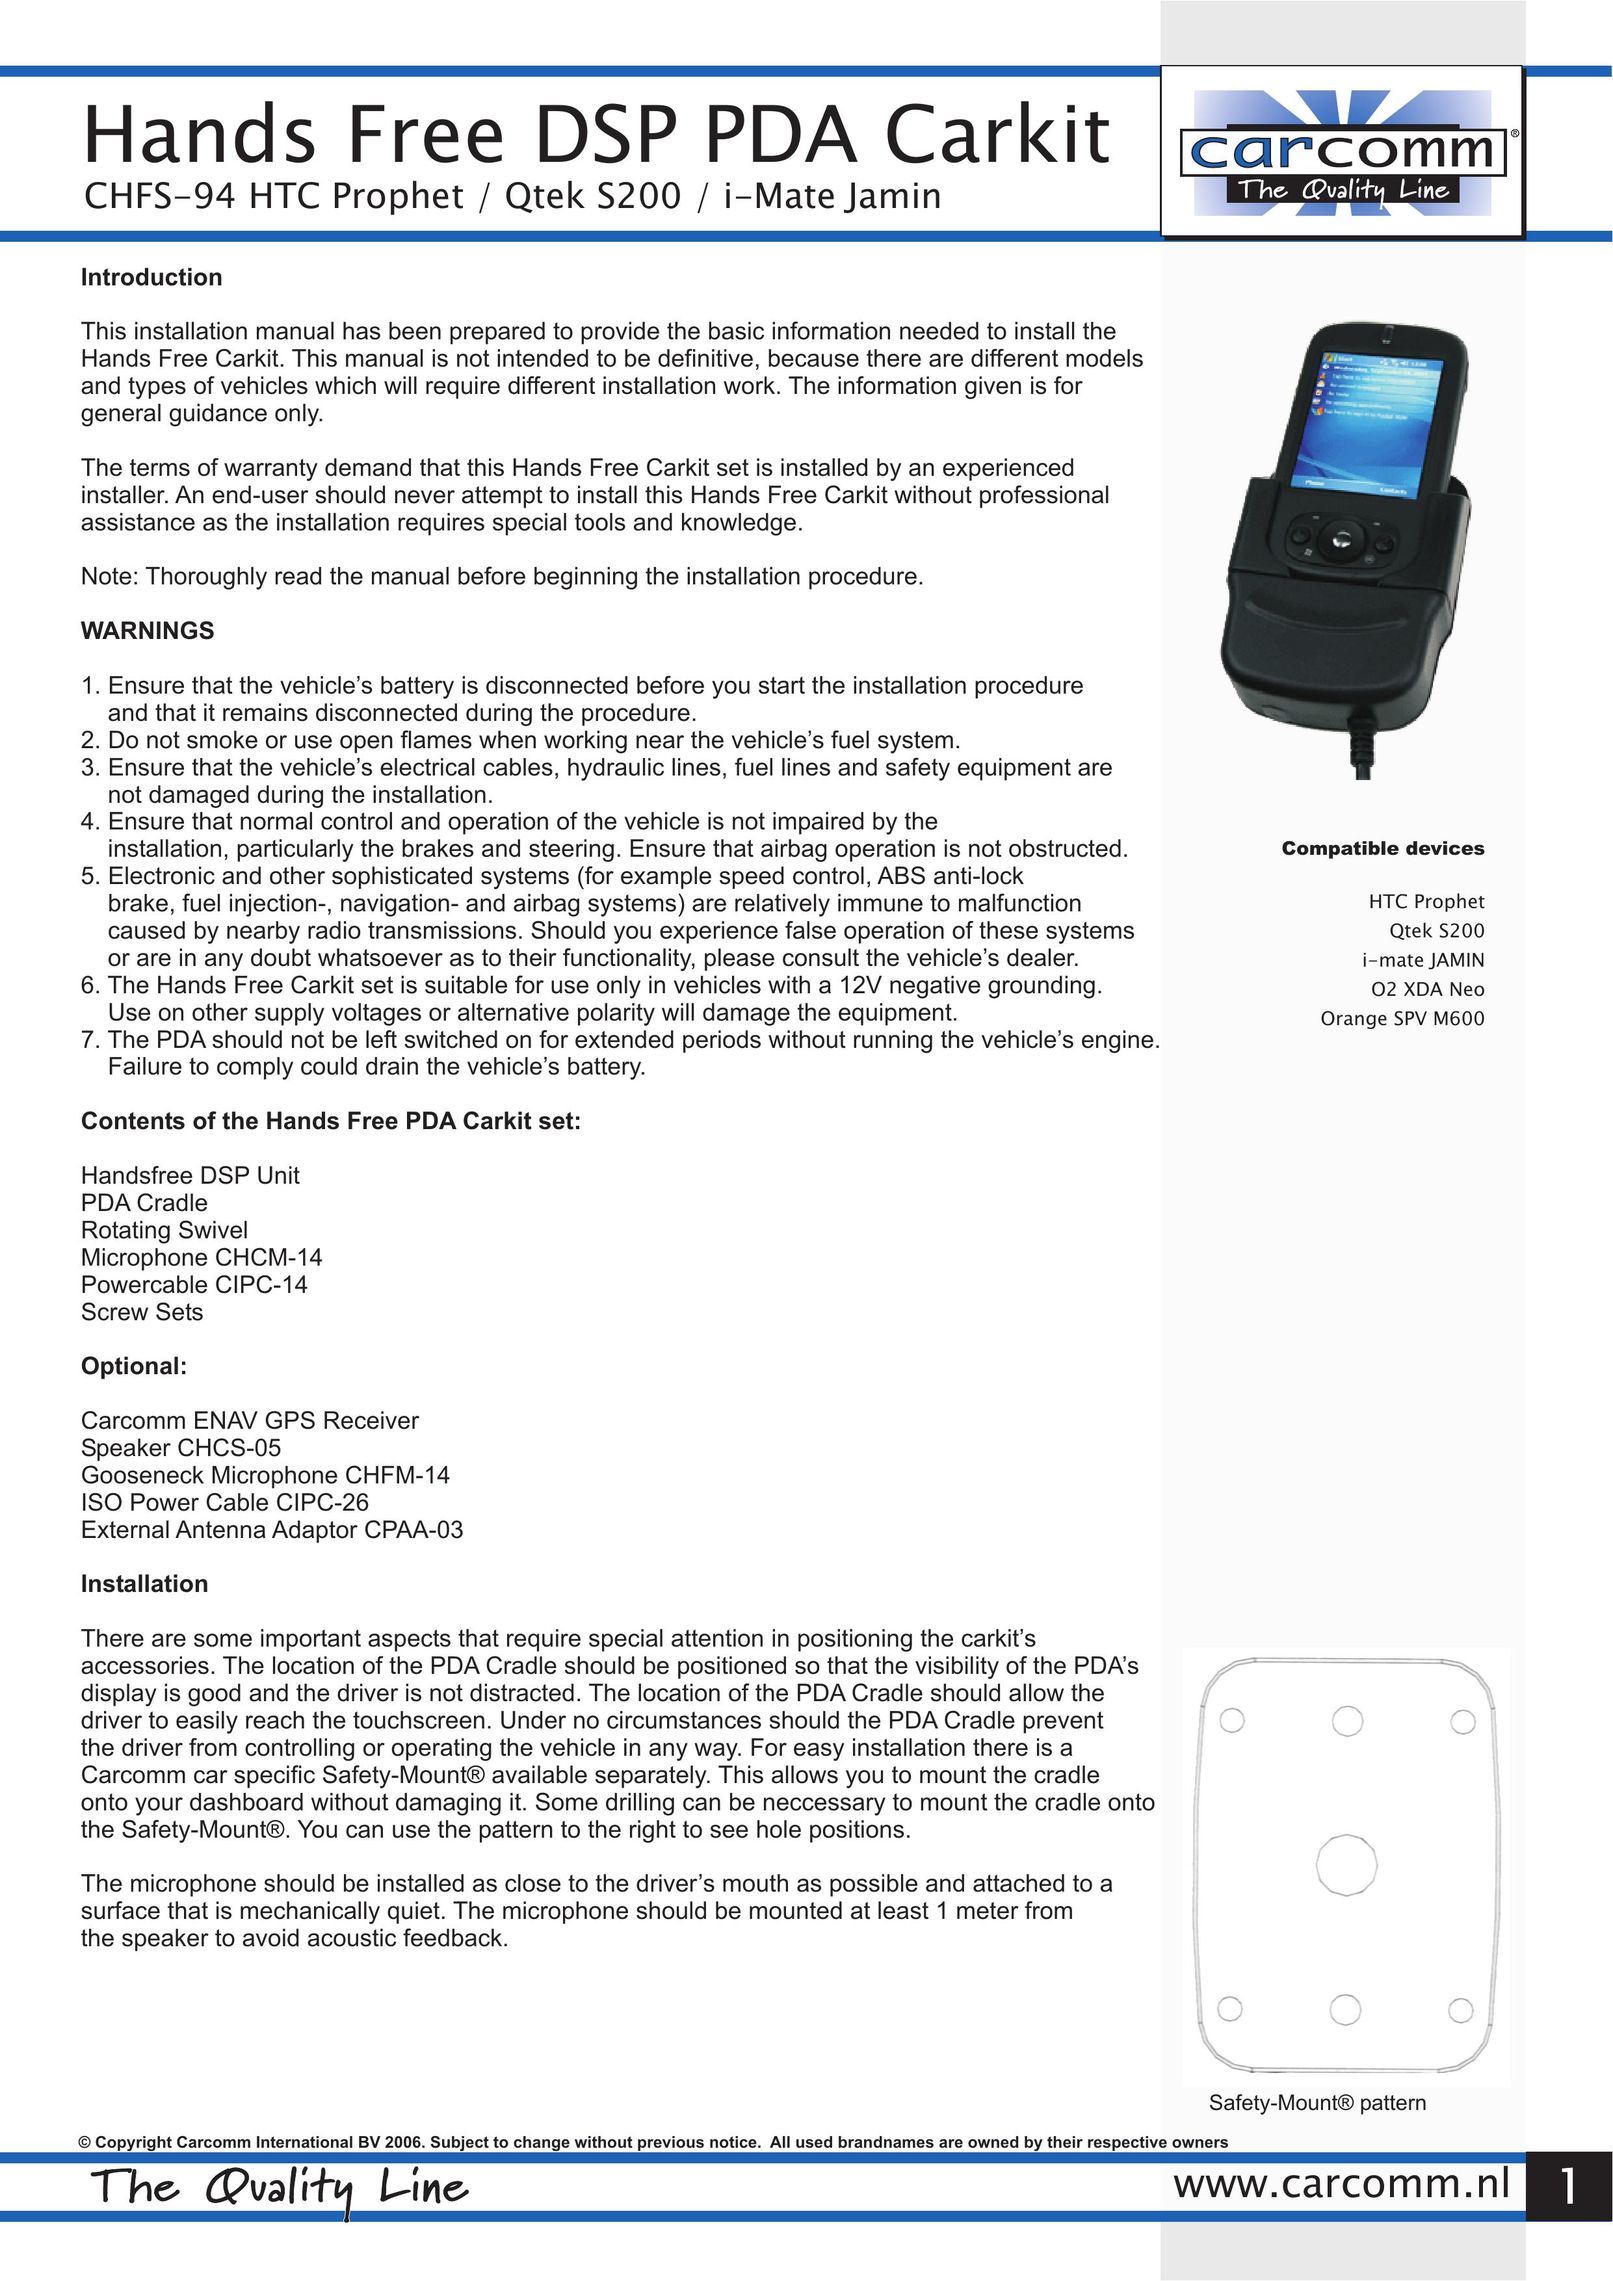 Carcomm CHFS-94 PDAs & Smartphones User Manual